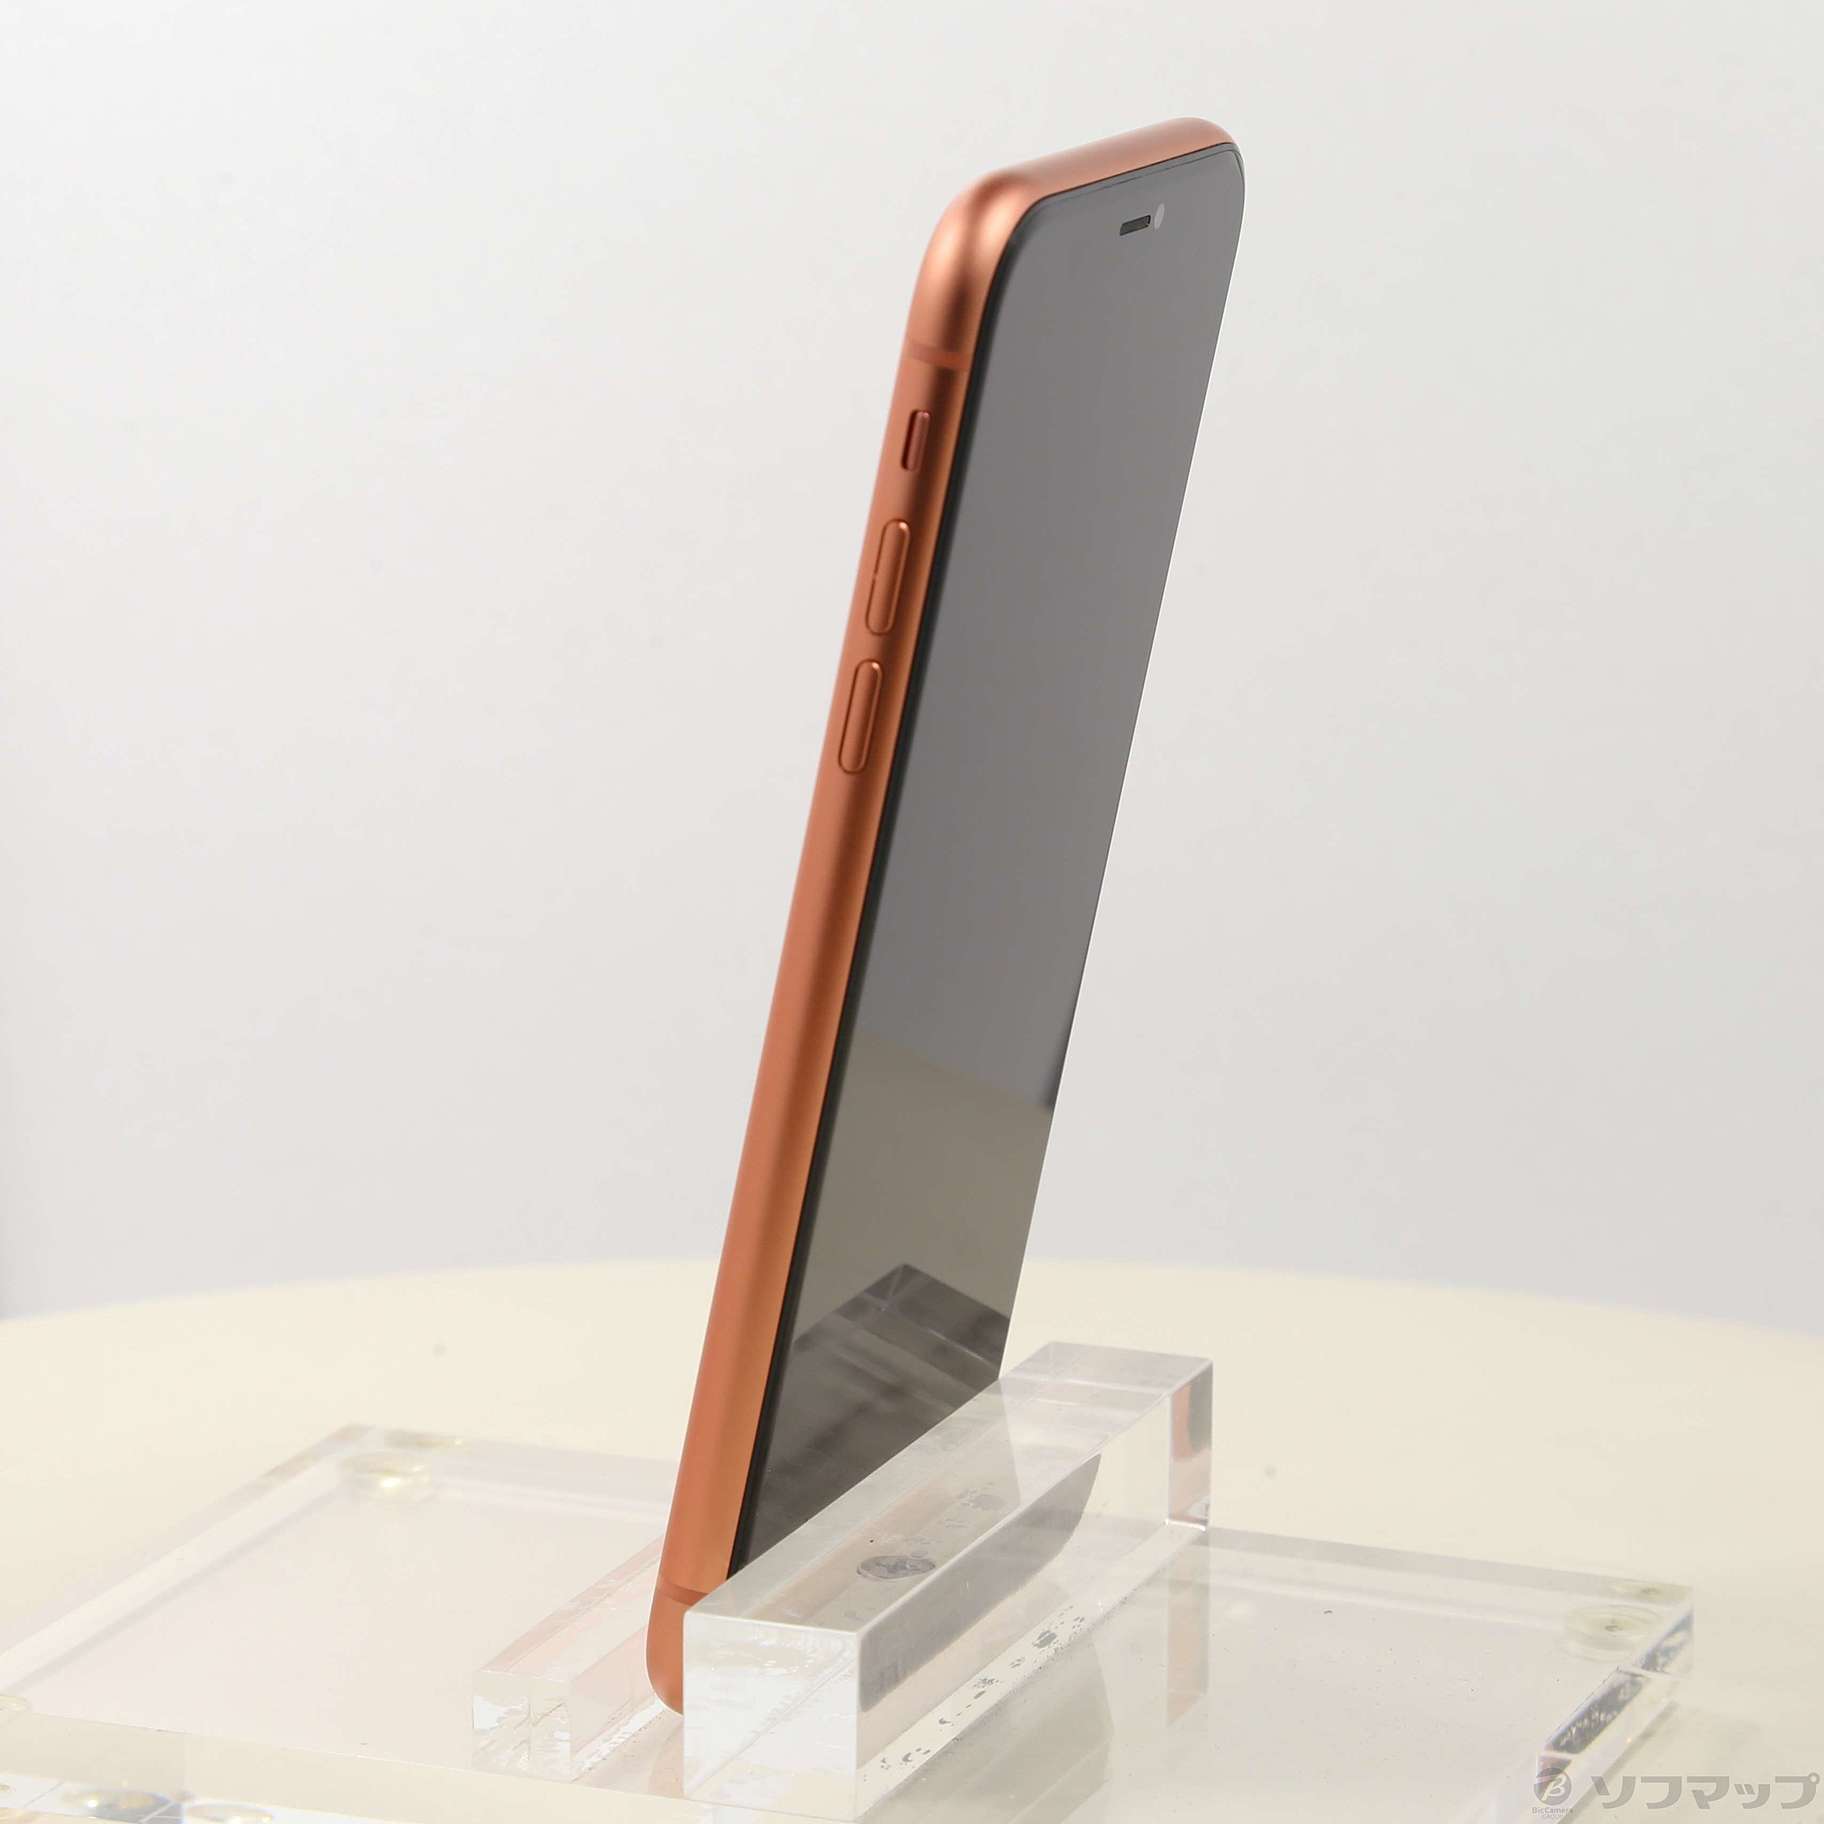 iPhoneXR 64GB コーラル バッテリー90% - mail.hondaprokevin.com